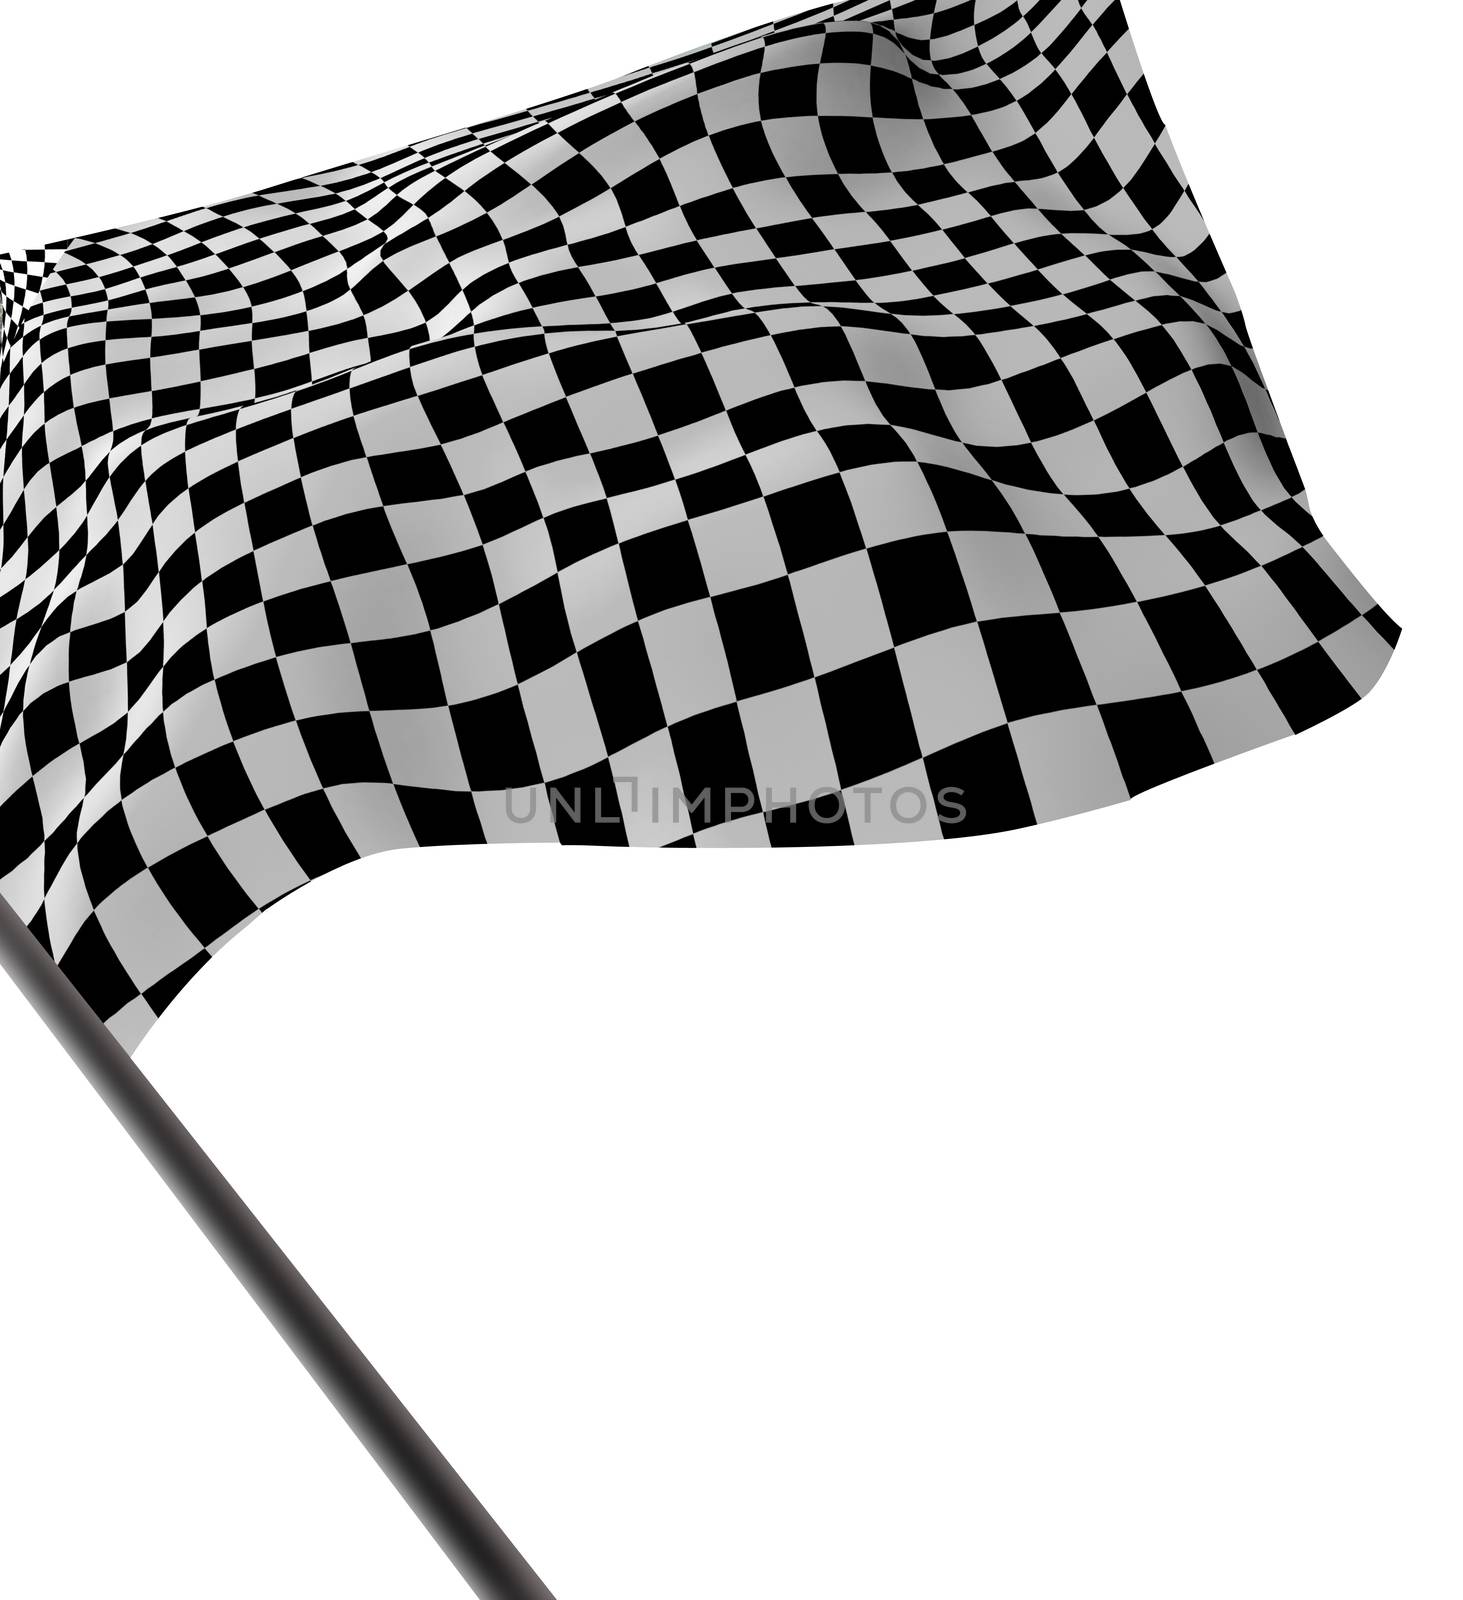 Large Checkered Flag by vitanovski